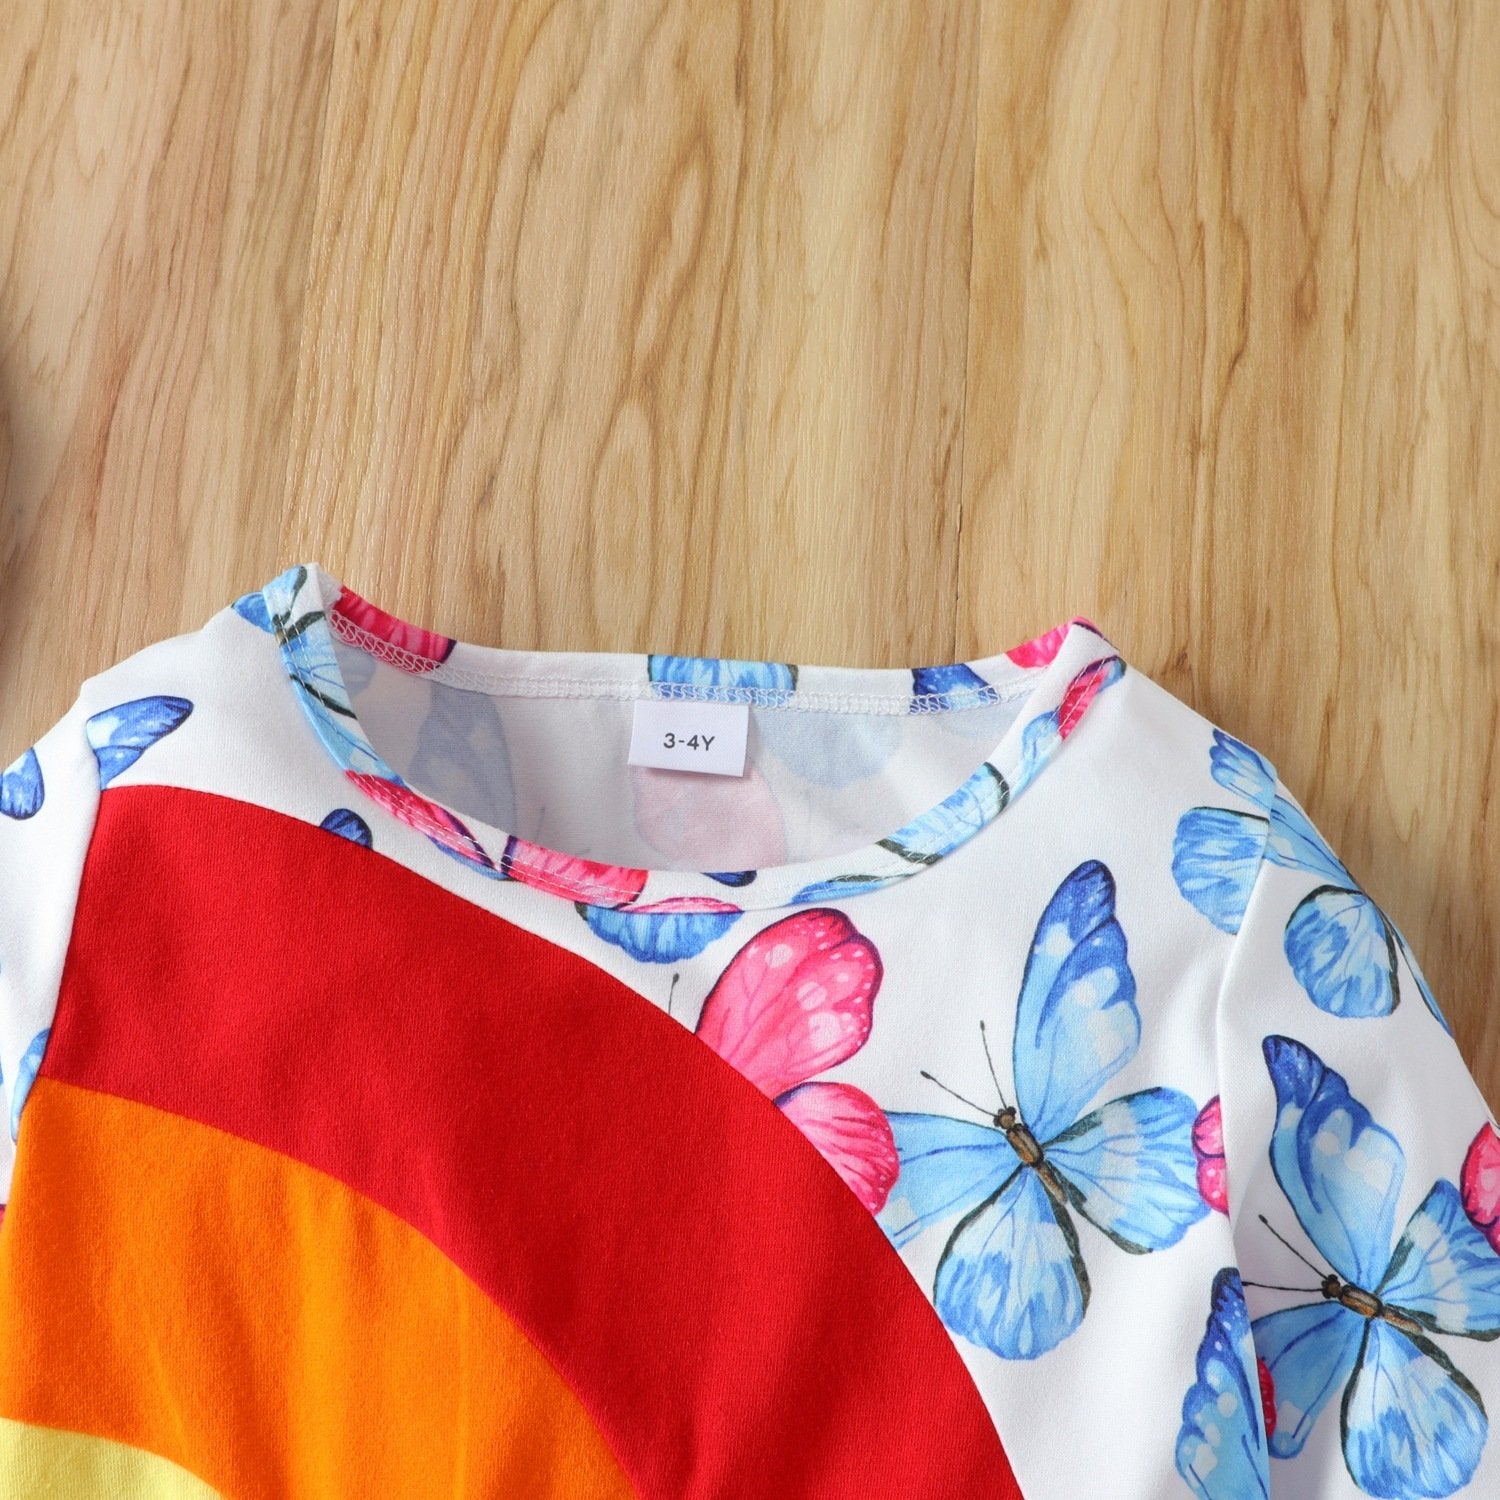 Girls Butterfly Printed Long Sleeve Dress trendy kids wholesale clothing